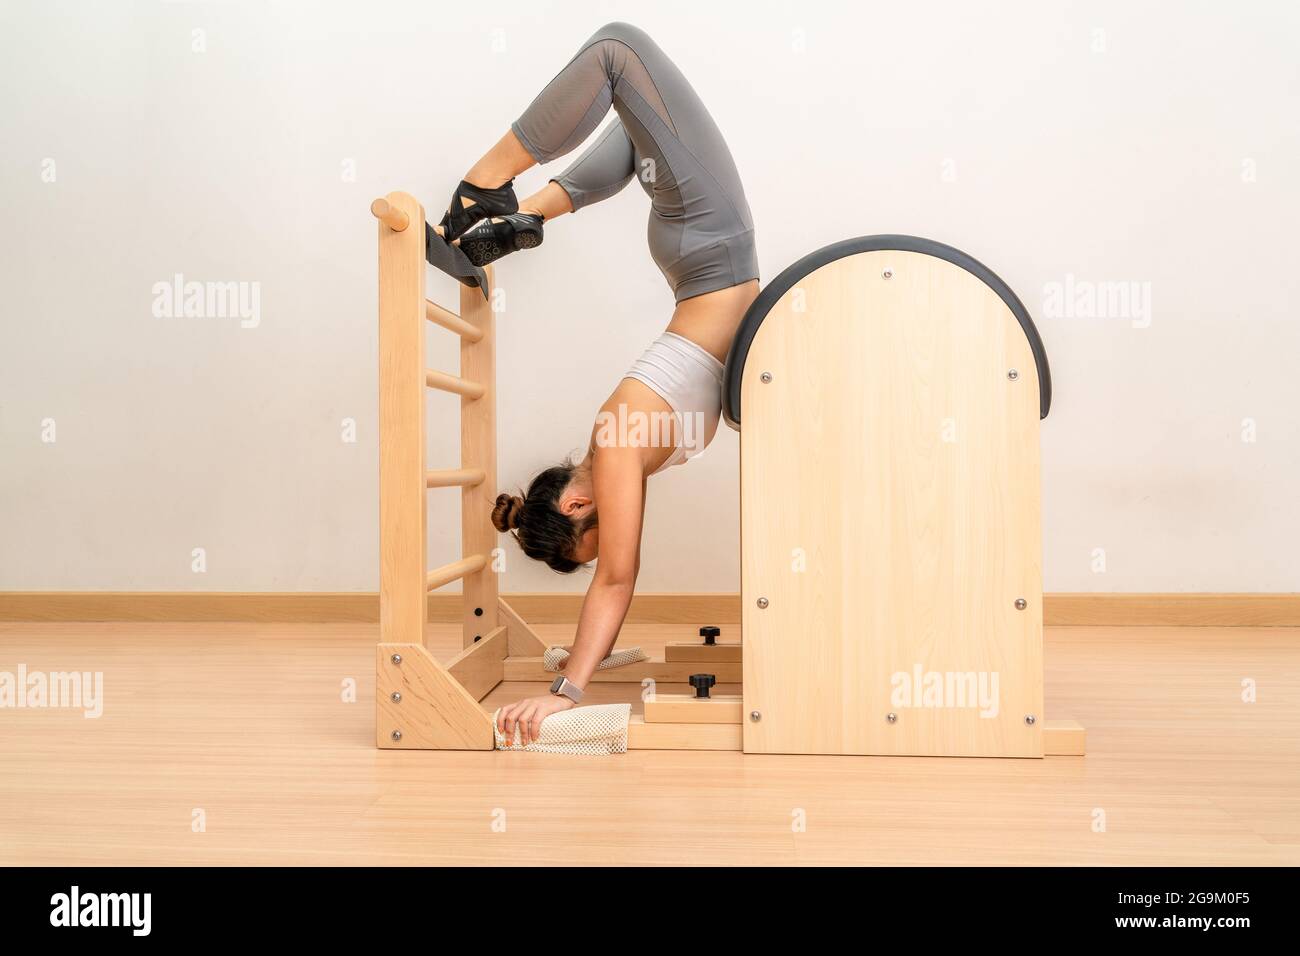 Premium Photo  Woman doing hand stand on pilates ladder barrel